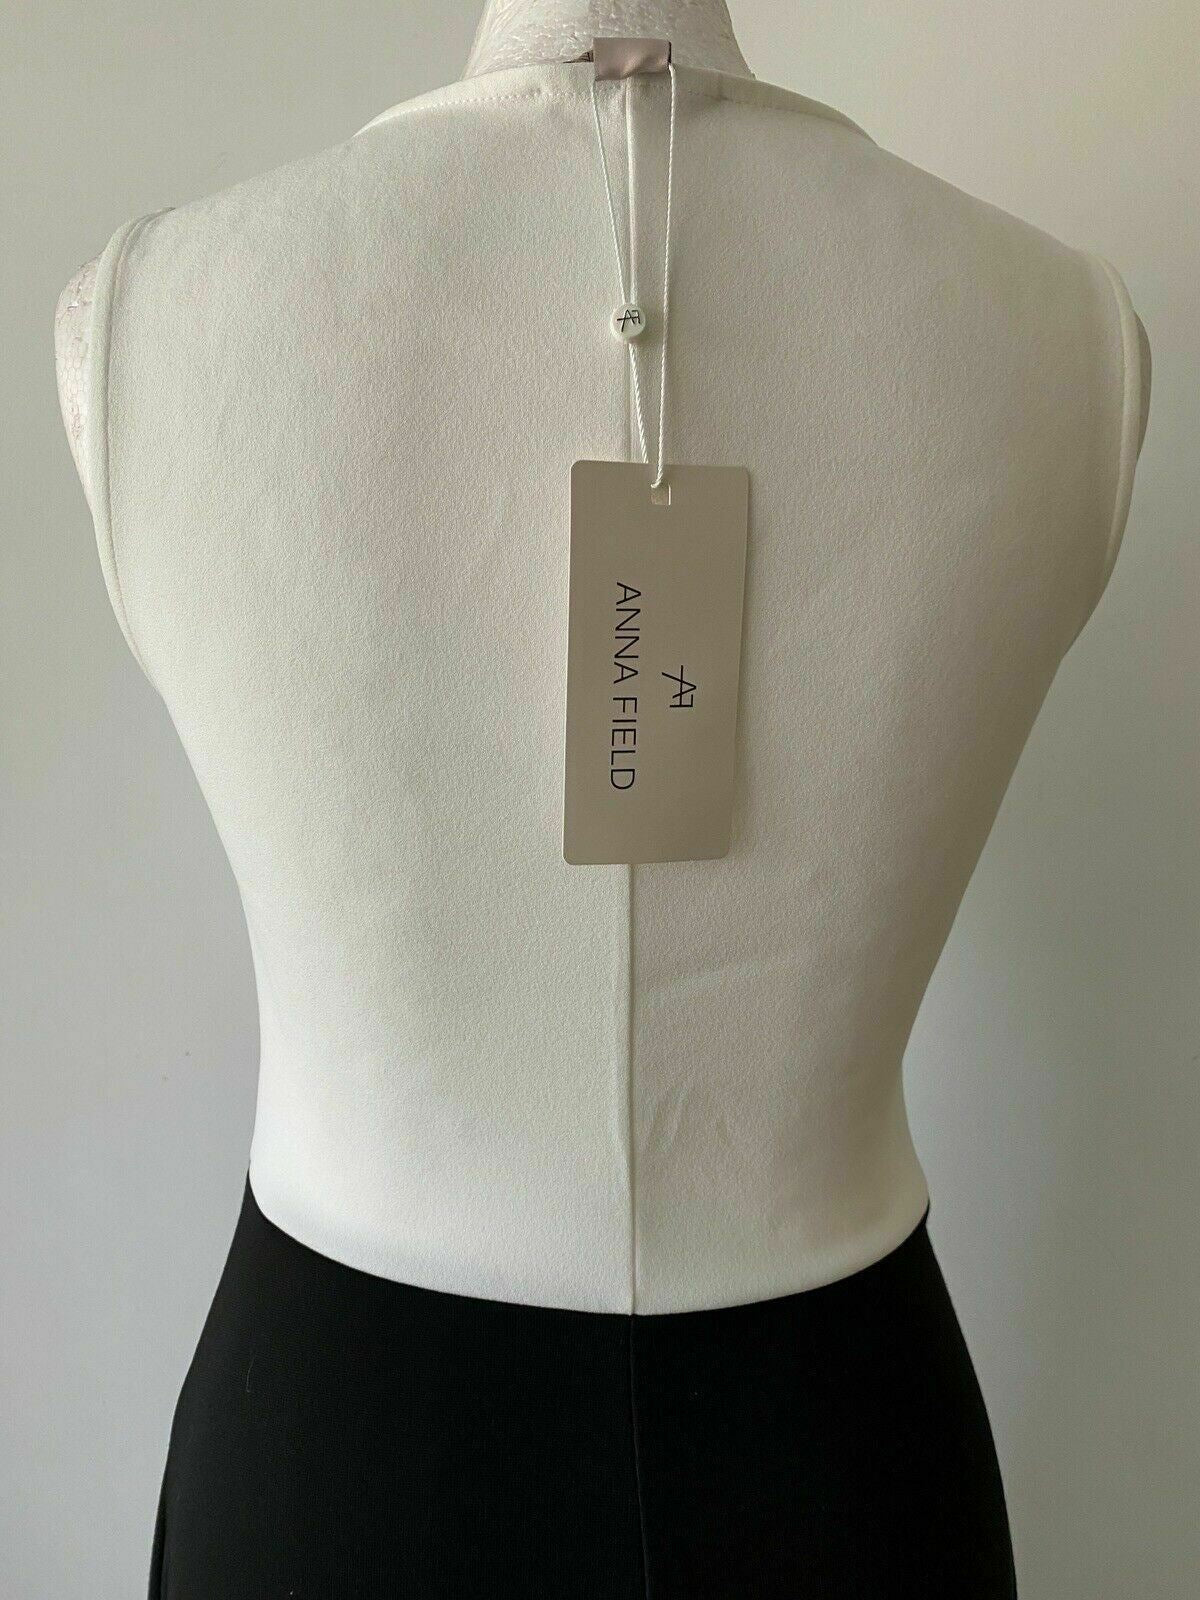 Anna Field Black / White Dress Lace Detail Sleeveless Dress Size 6 UK / 34 EU